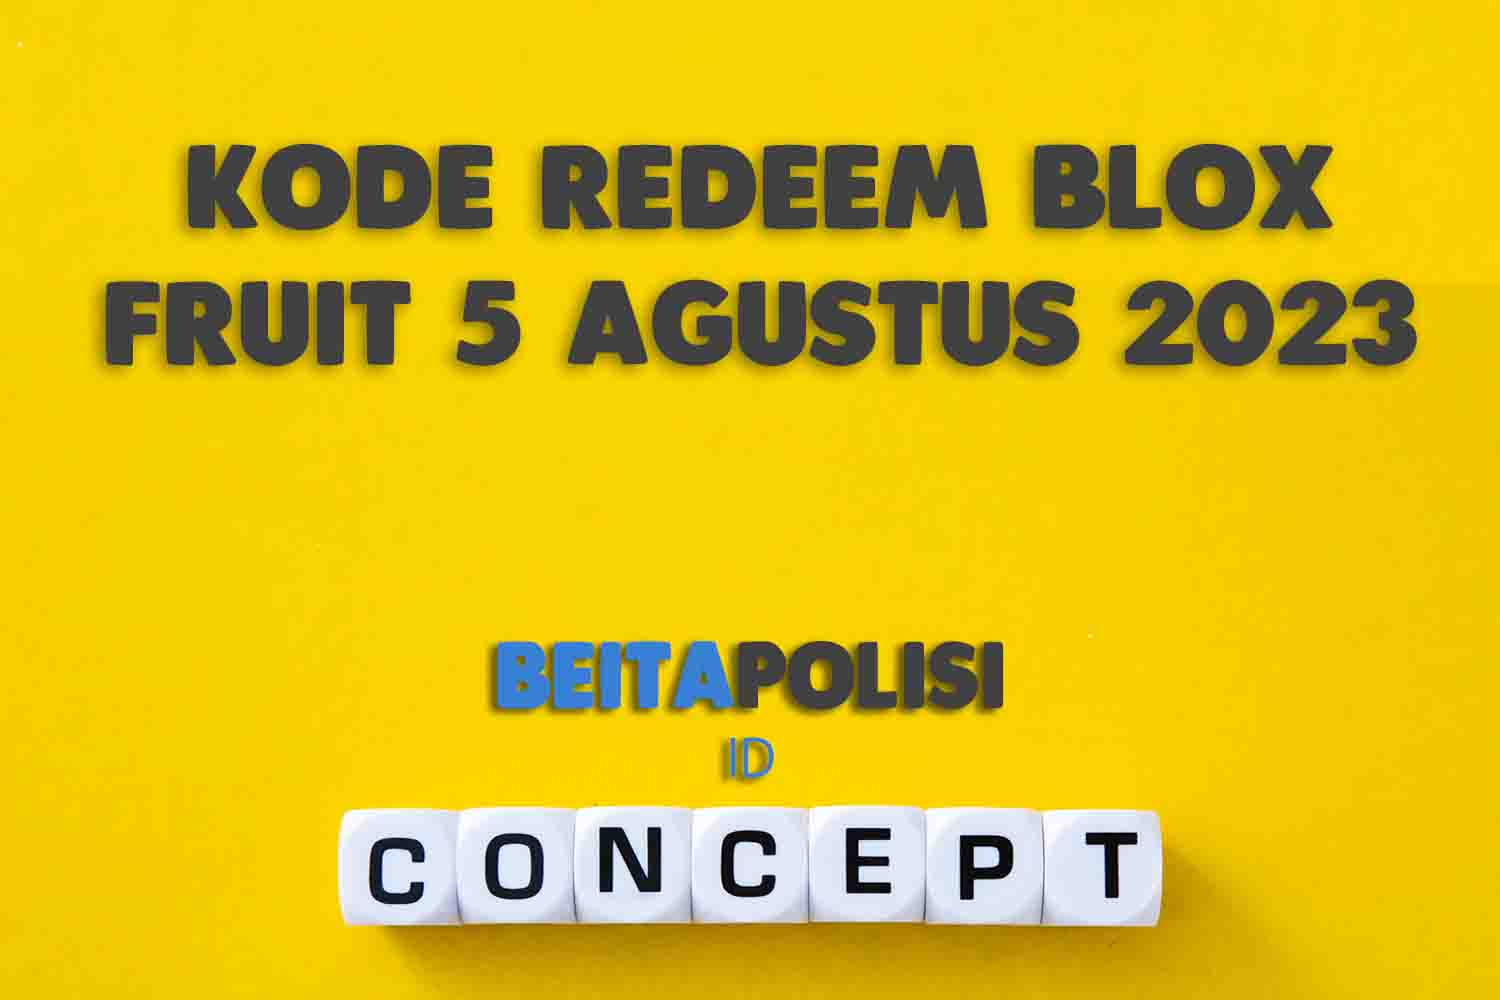 Kode Redeem Blox Fruit 5 Agustus 2023